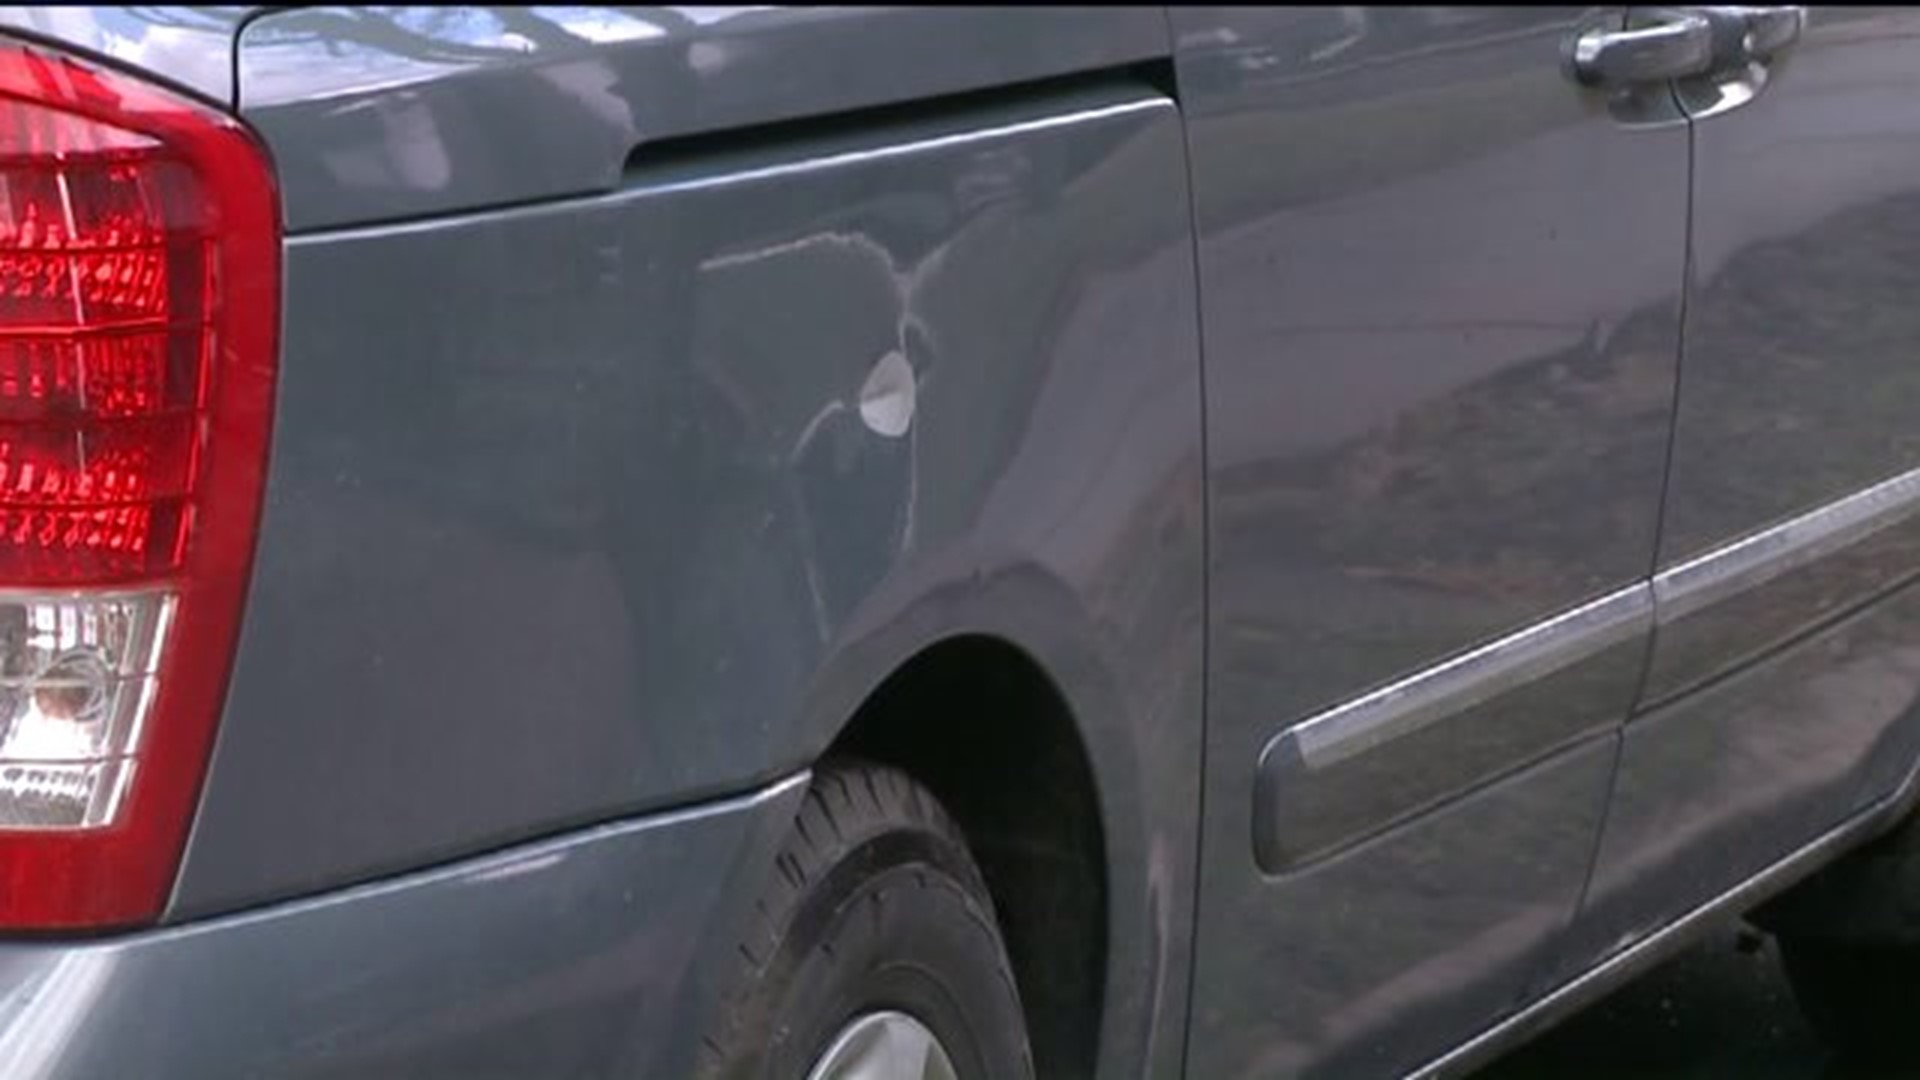 Vehicles in Williamsport Damaged By Gunshots